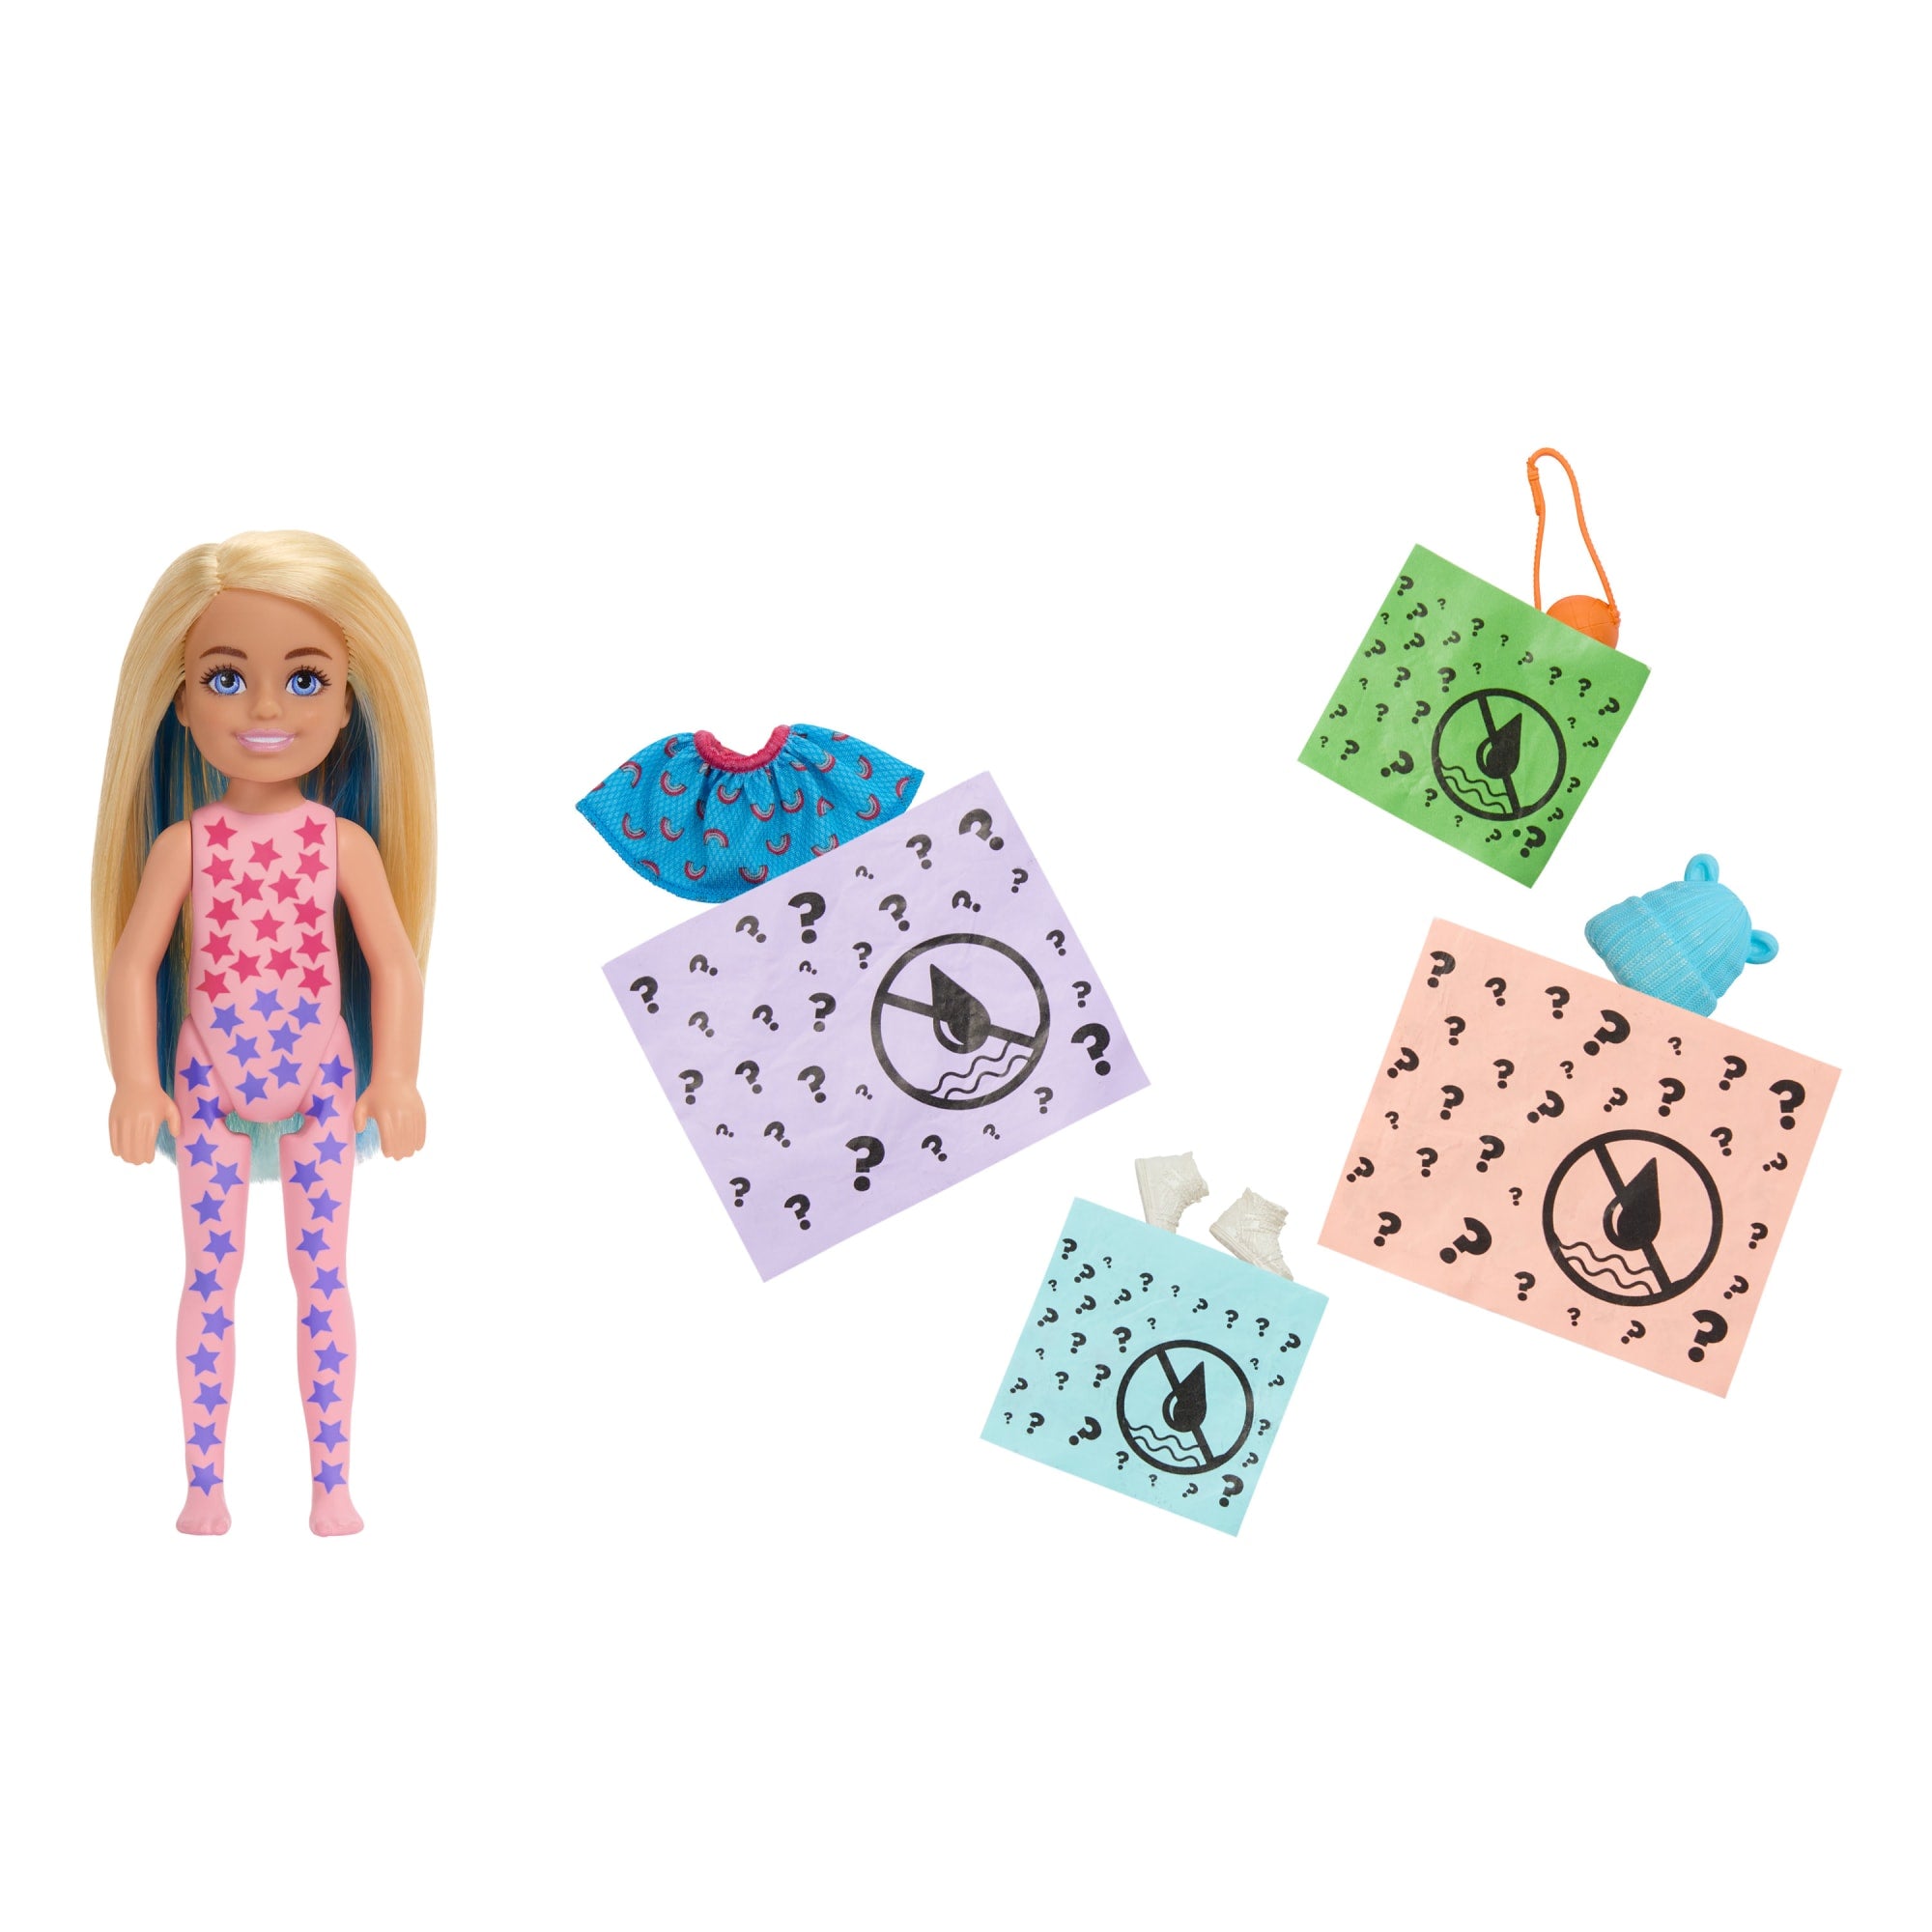 Color Reveal Barbie  Owls Hollow Toys & Games